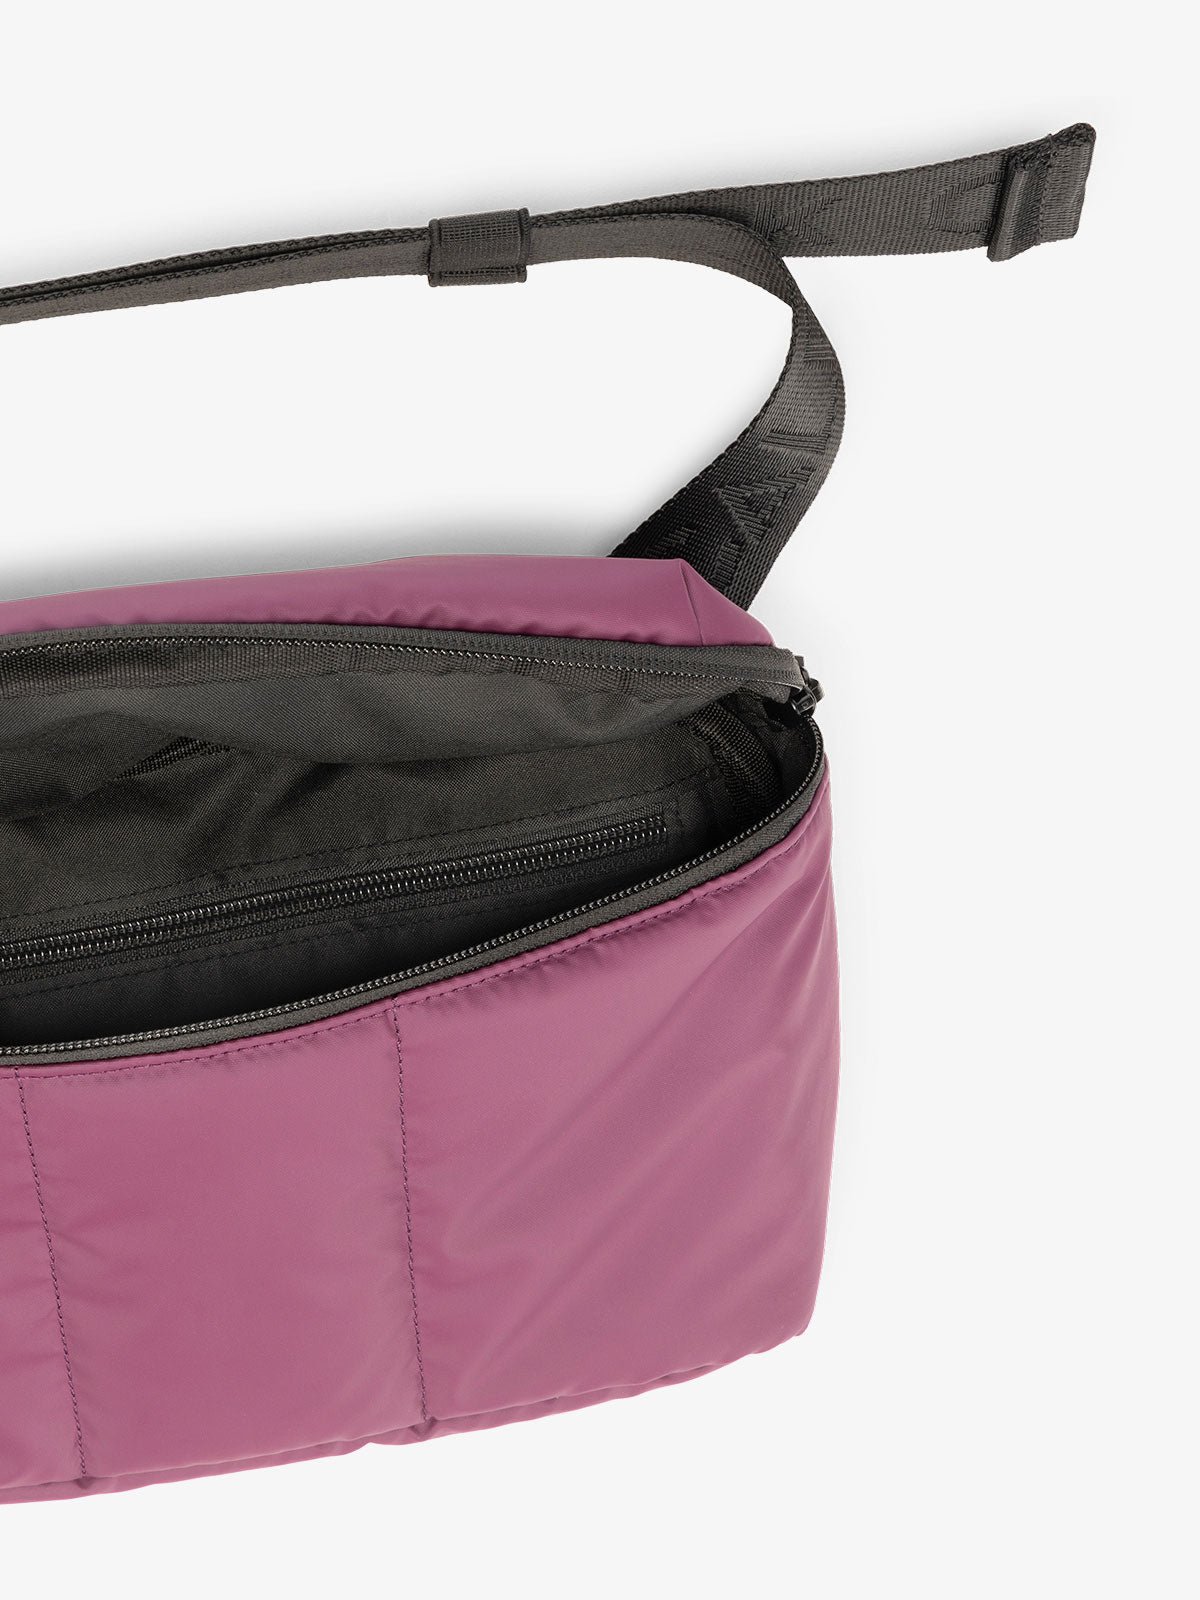 CALPAK Luka Belt Bag close up interior and strap in purple plum